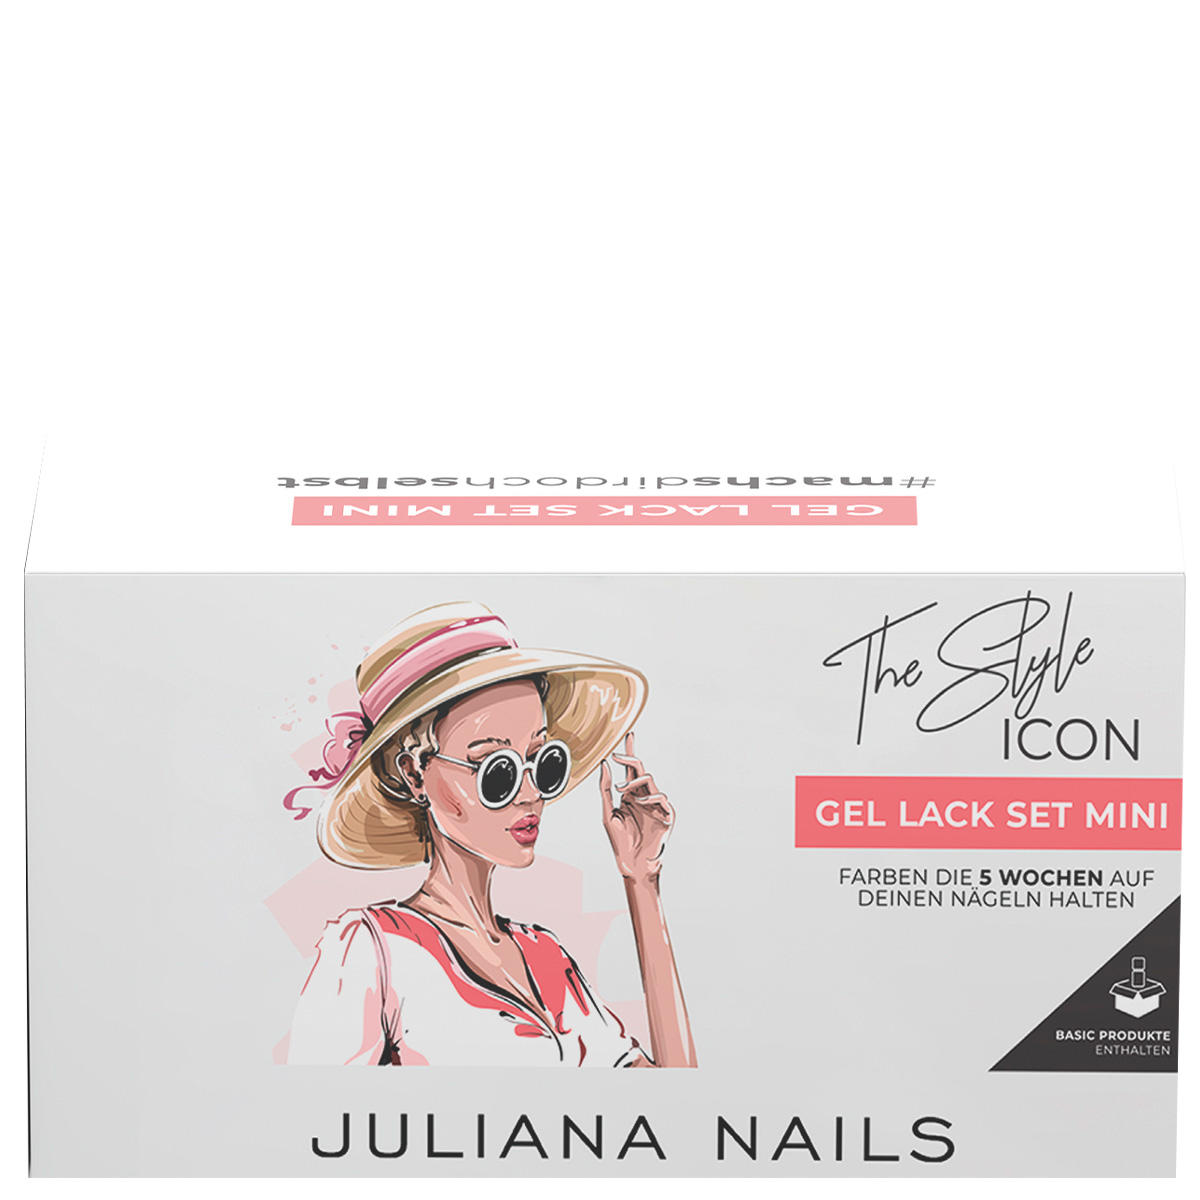 Juliana Nails Gel Lack Set - Mini  - 1